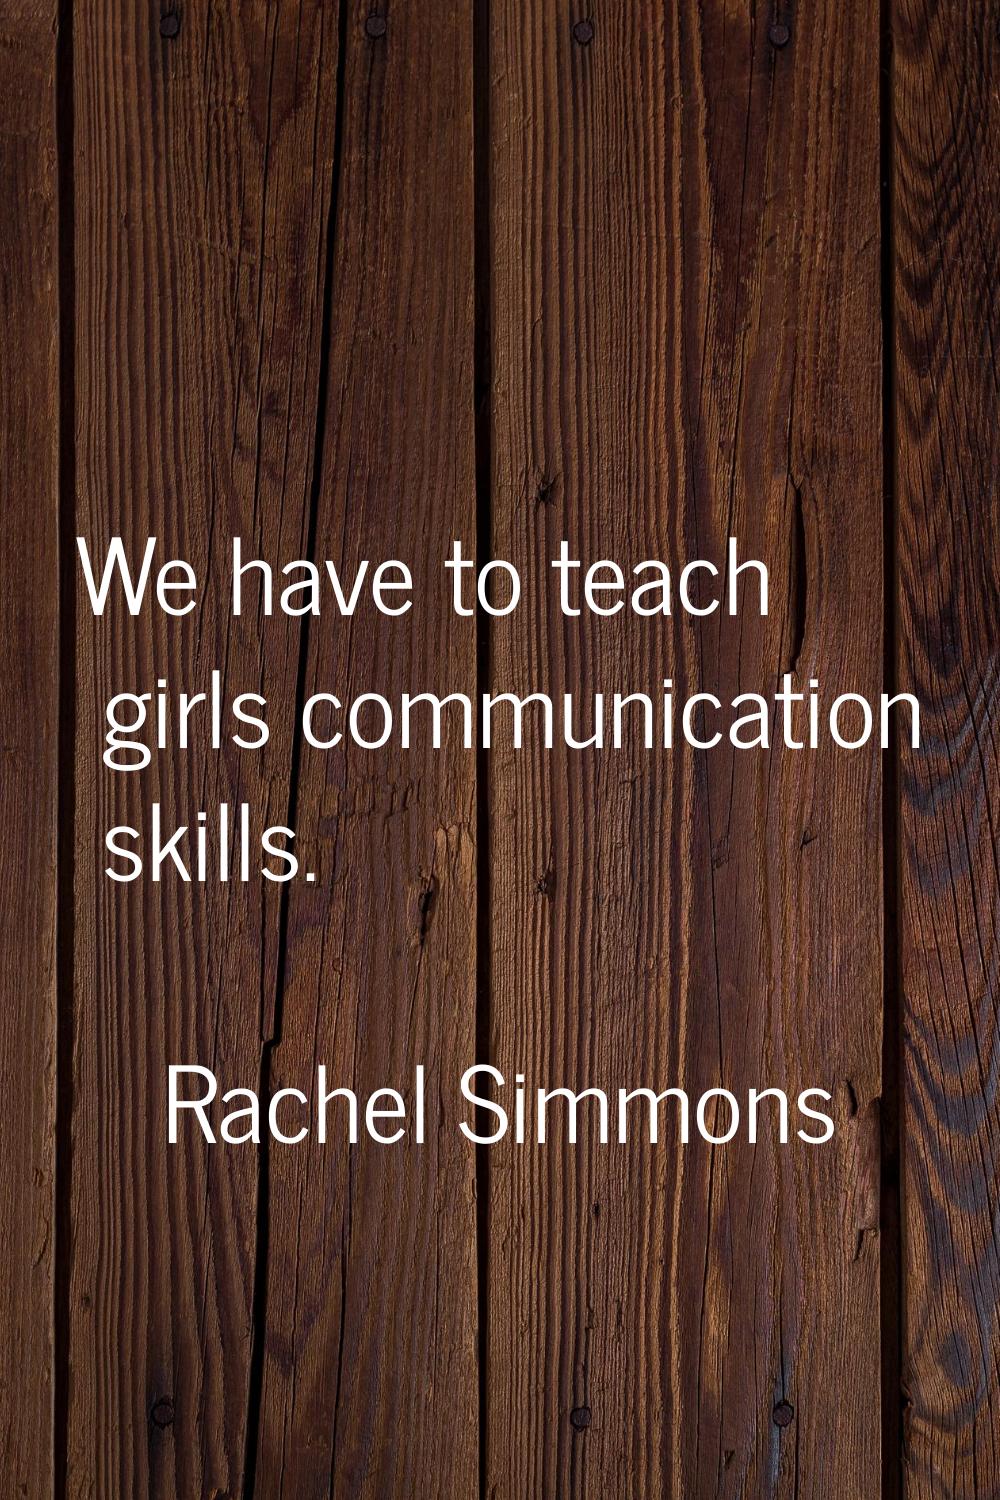 We have to teach girls communication skills.